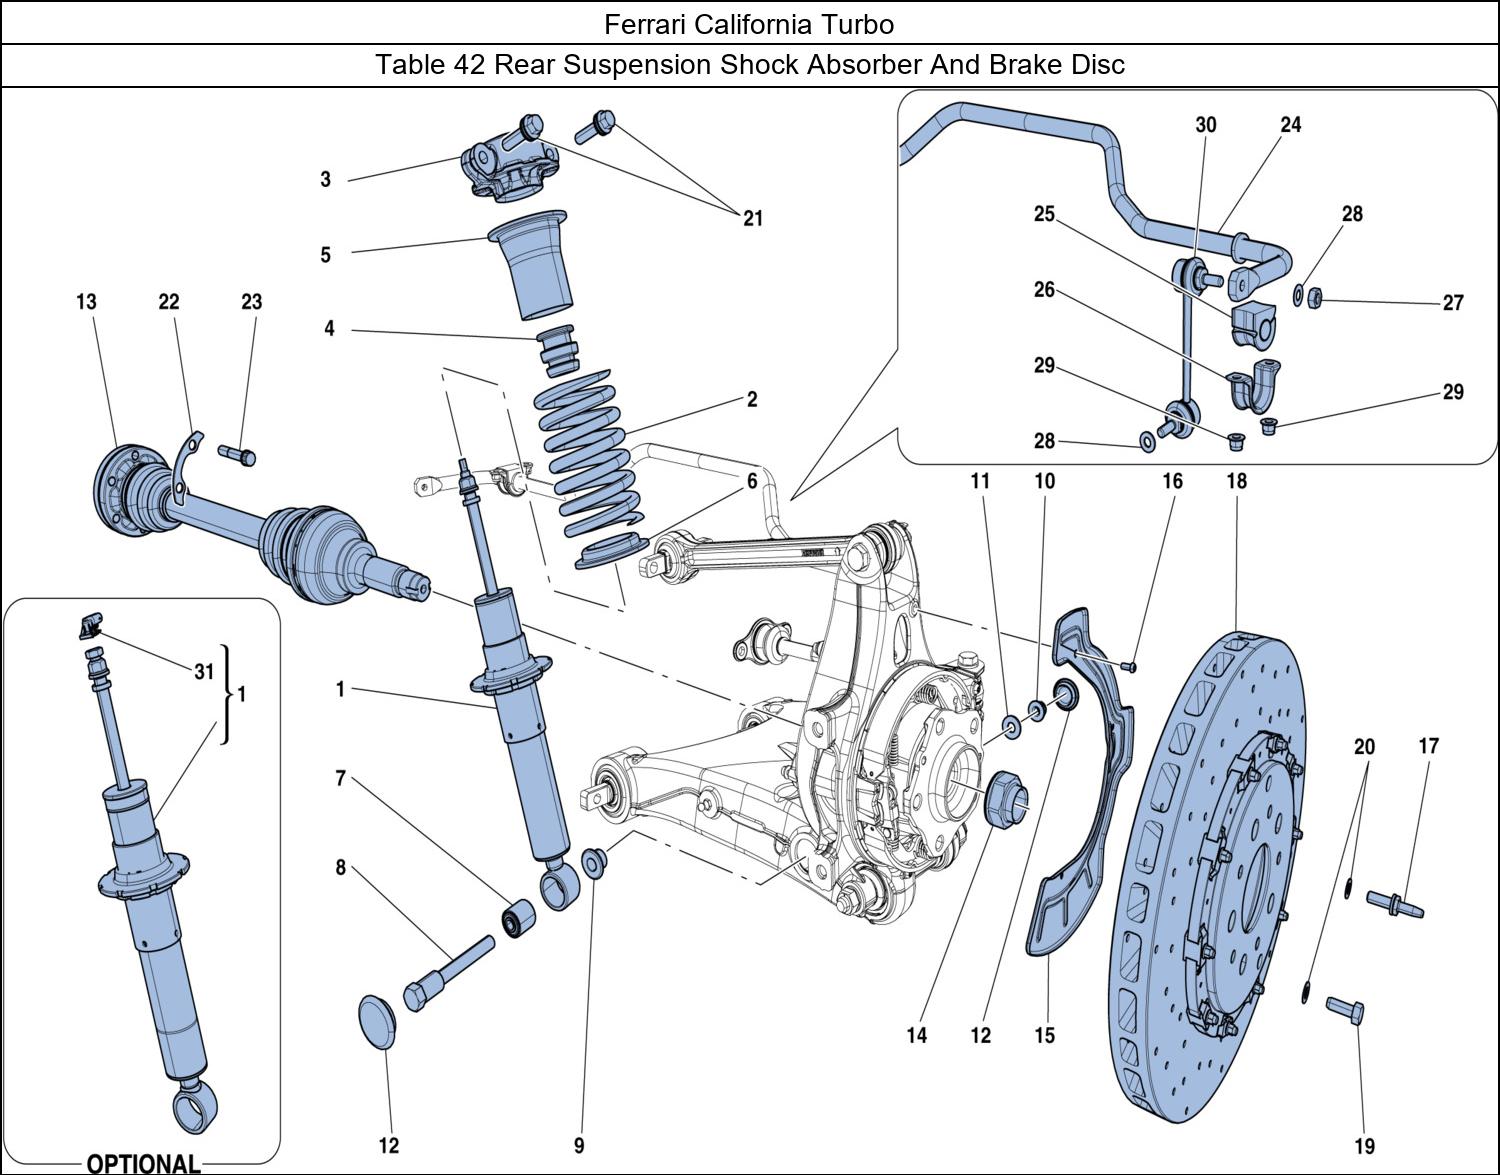 Ferrari Parts Ferrari California Turbo Table 42 Rear Suspension Shock Absorber And Brake Disc